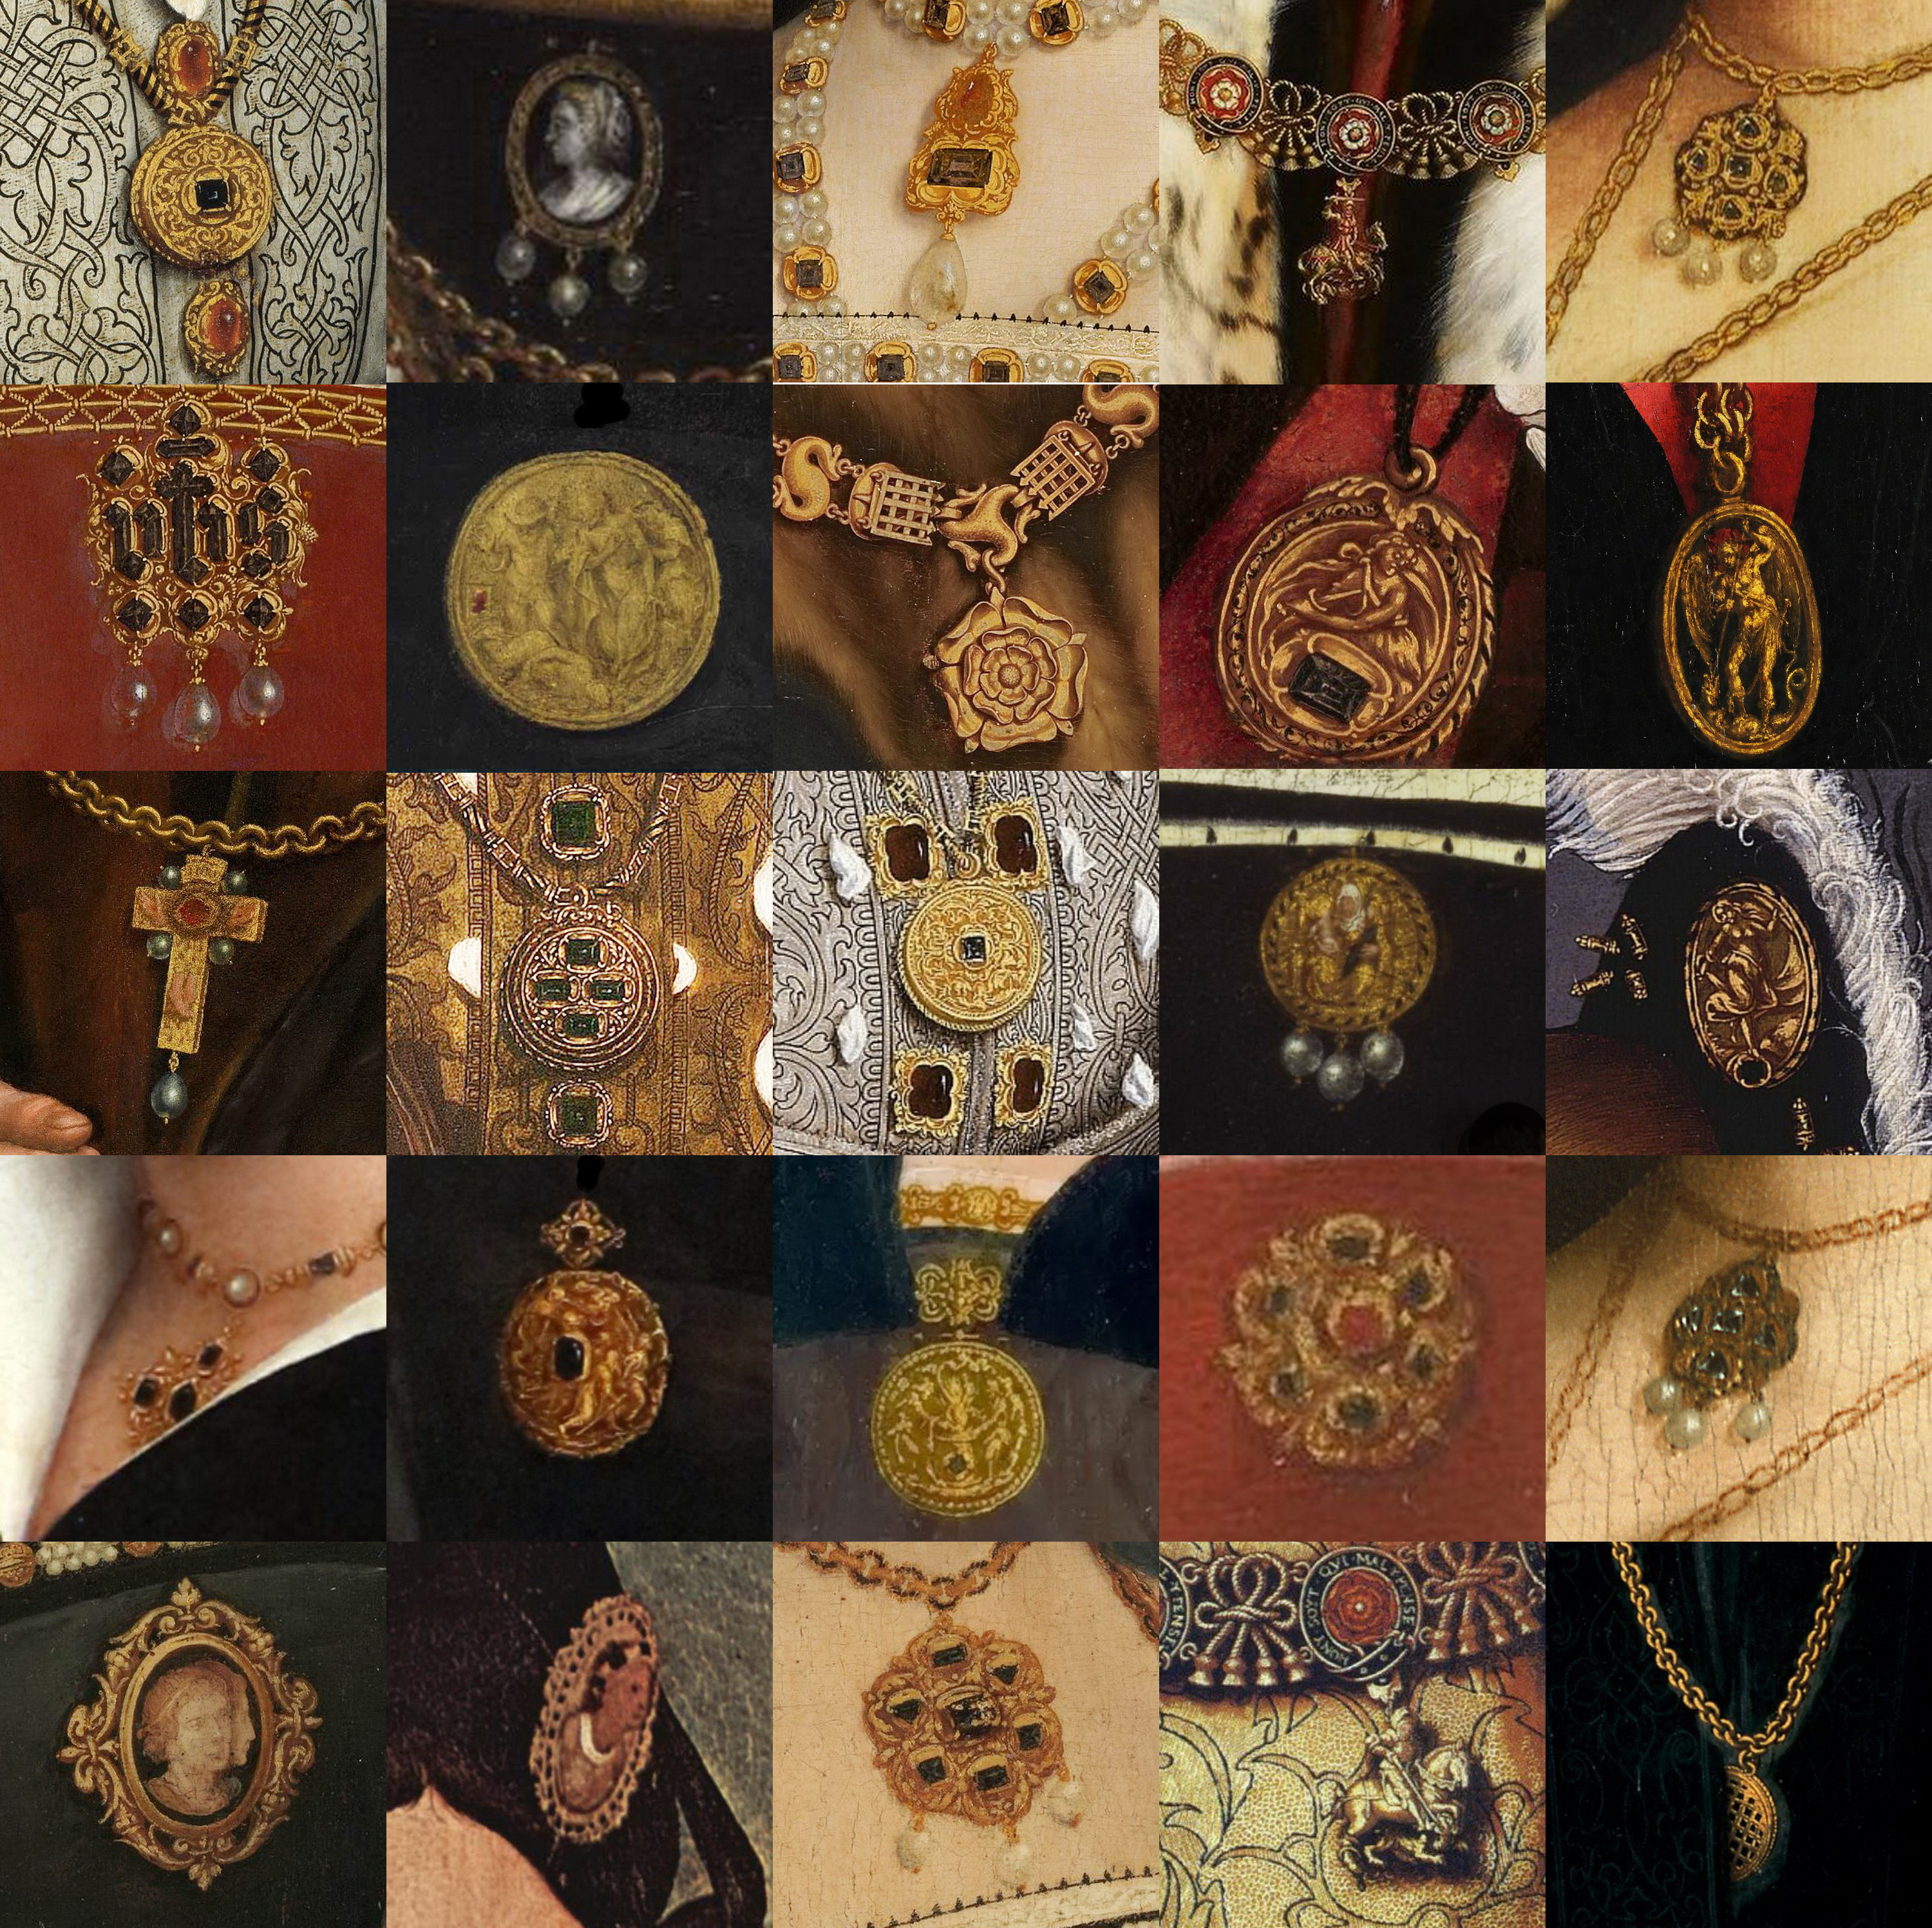 https://upload.wikimedia.org/wikipedia/commons/4/49/Jewellery_in_Holbein%27s_portraits_-_by_shakko.jpg